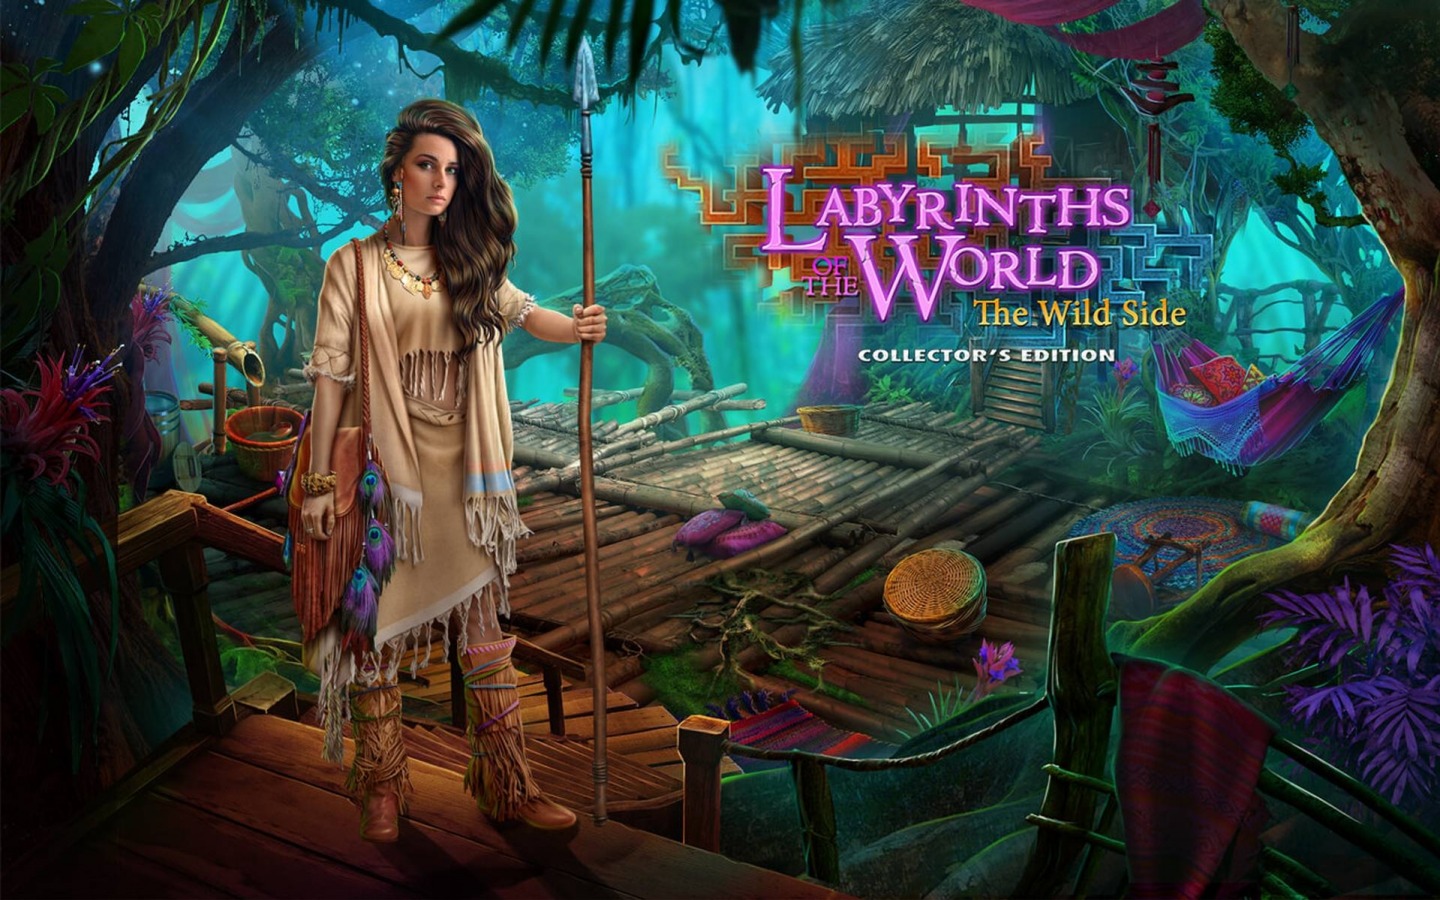 Игра лабиринт 11. Labyrinth игра. Labyrinths of the World 11: the Wild Side. Labyrinths 11 прохождение игры.